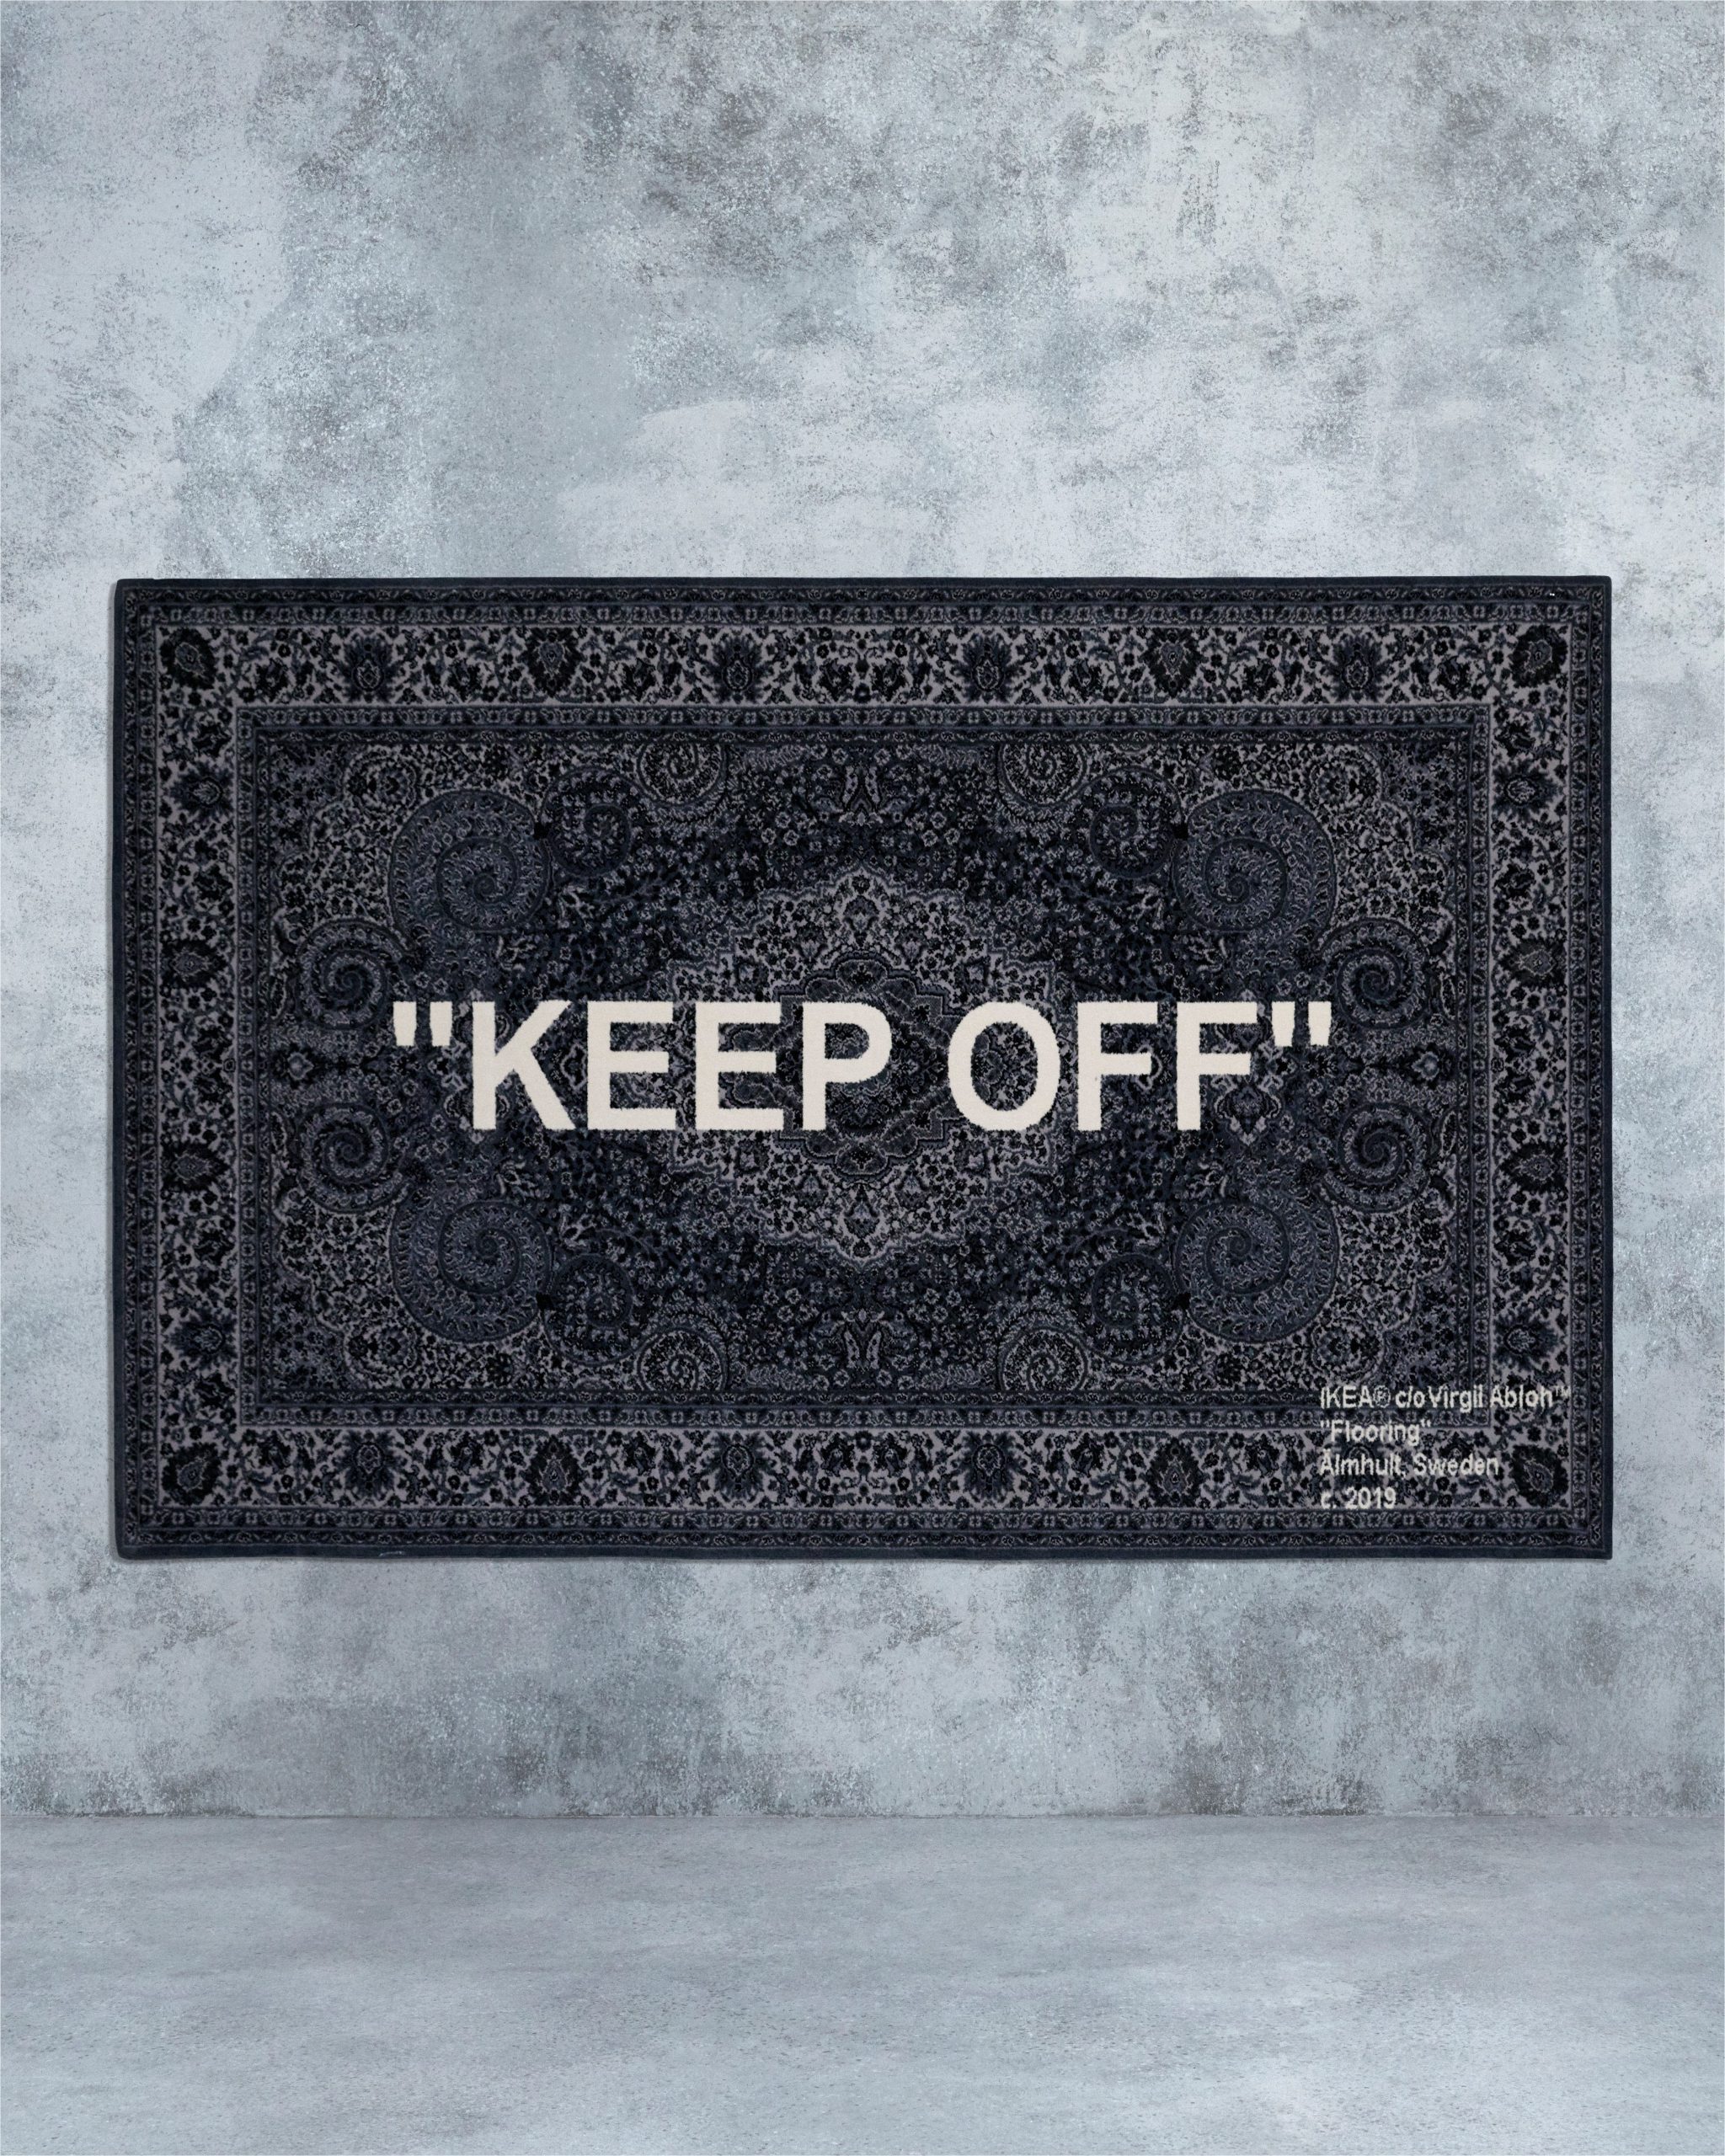 Off White area Rug Ikea Keep Off” Designed by Virgil Abloh Men S Artistic Director